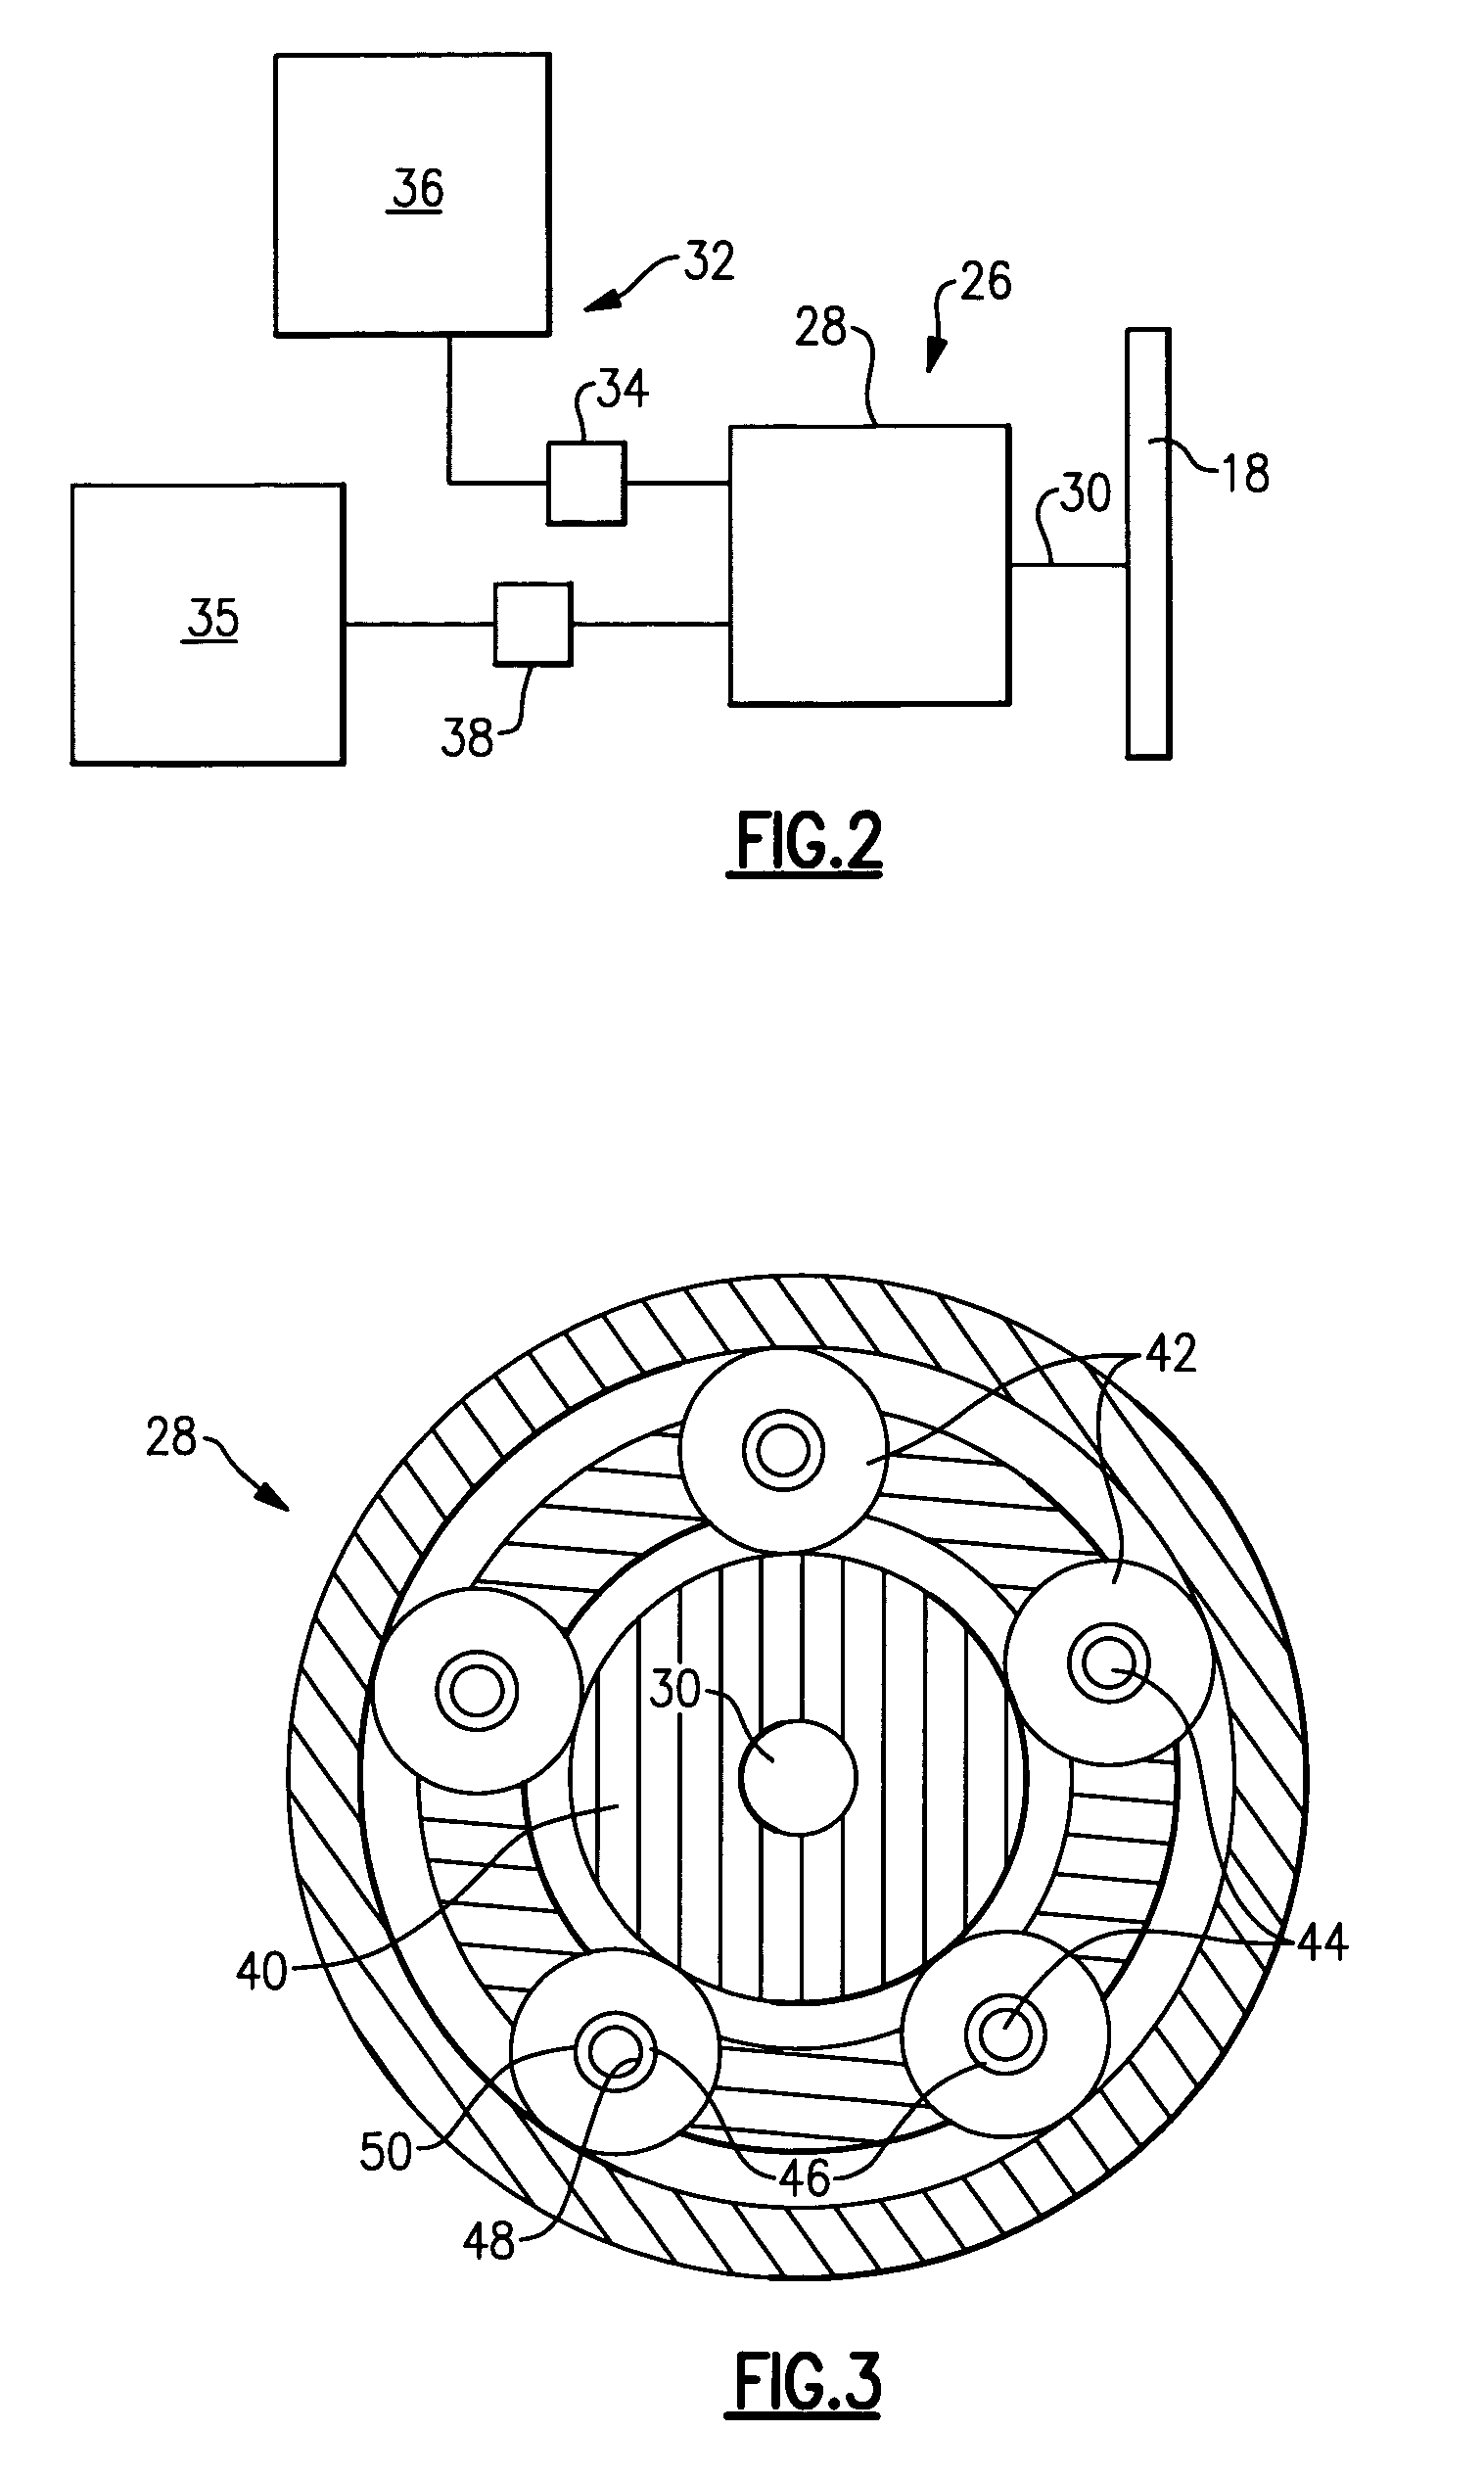 Lubrication of windmilling journal bearings